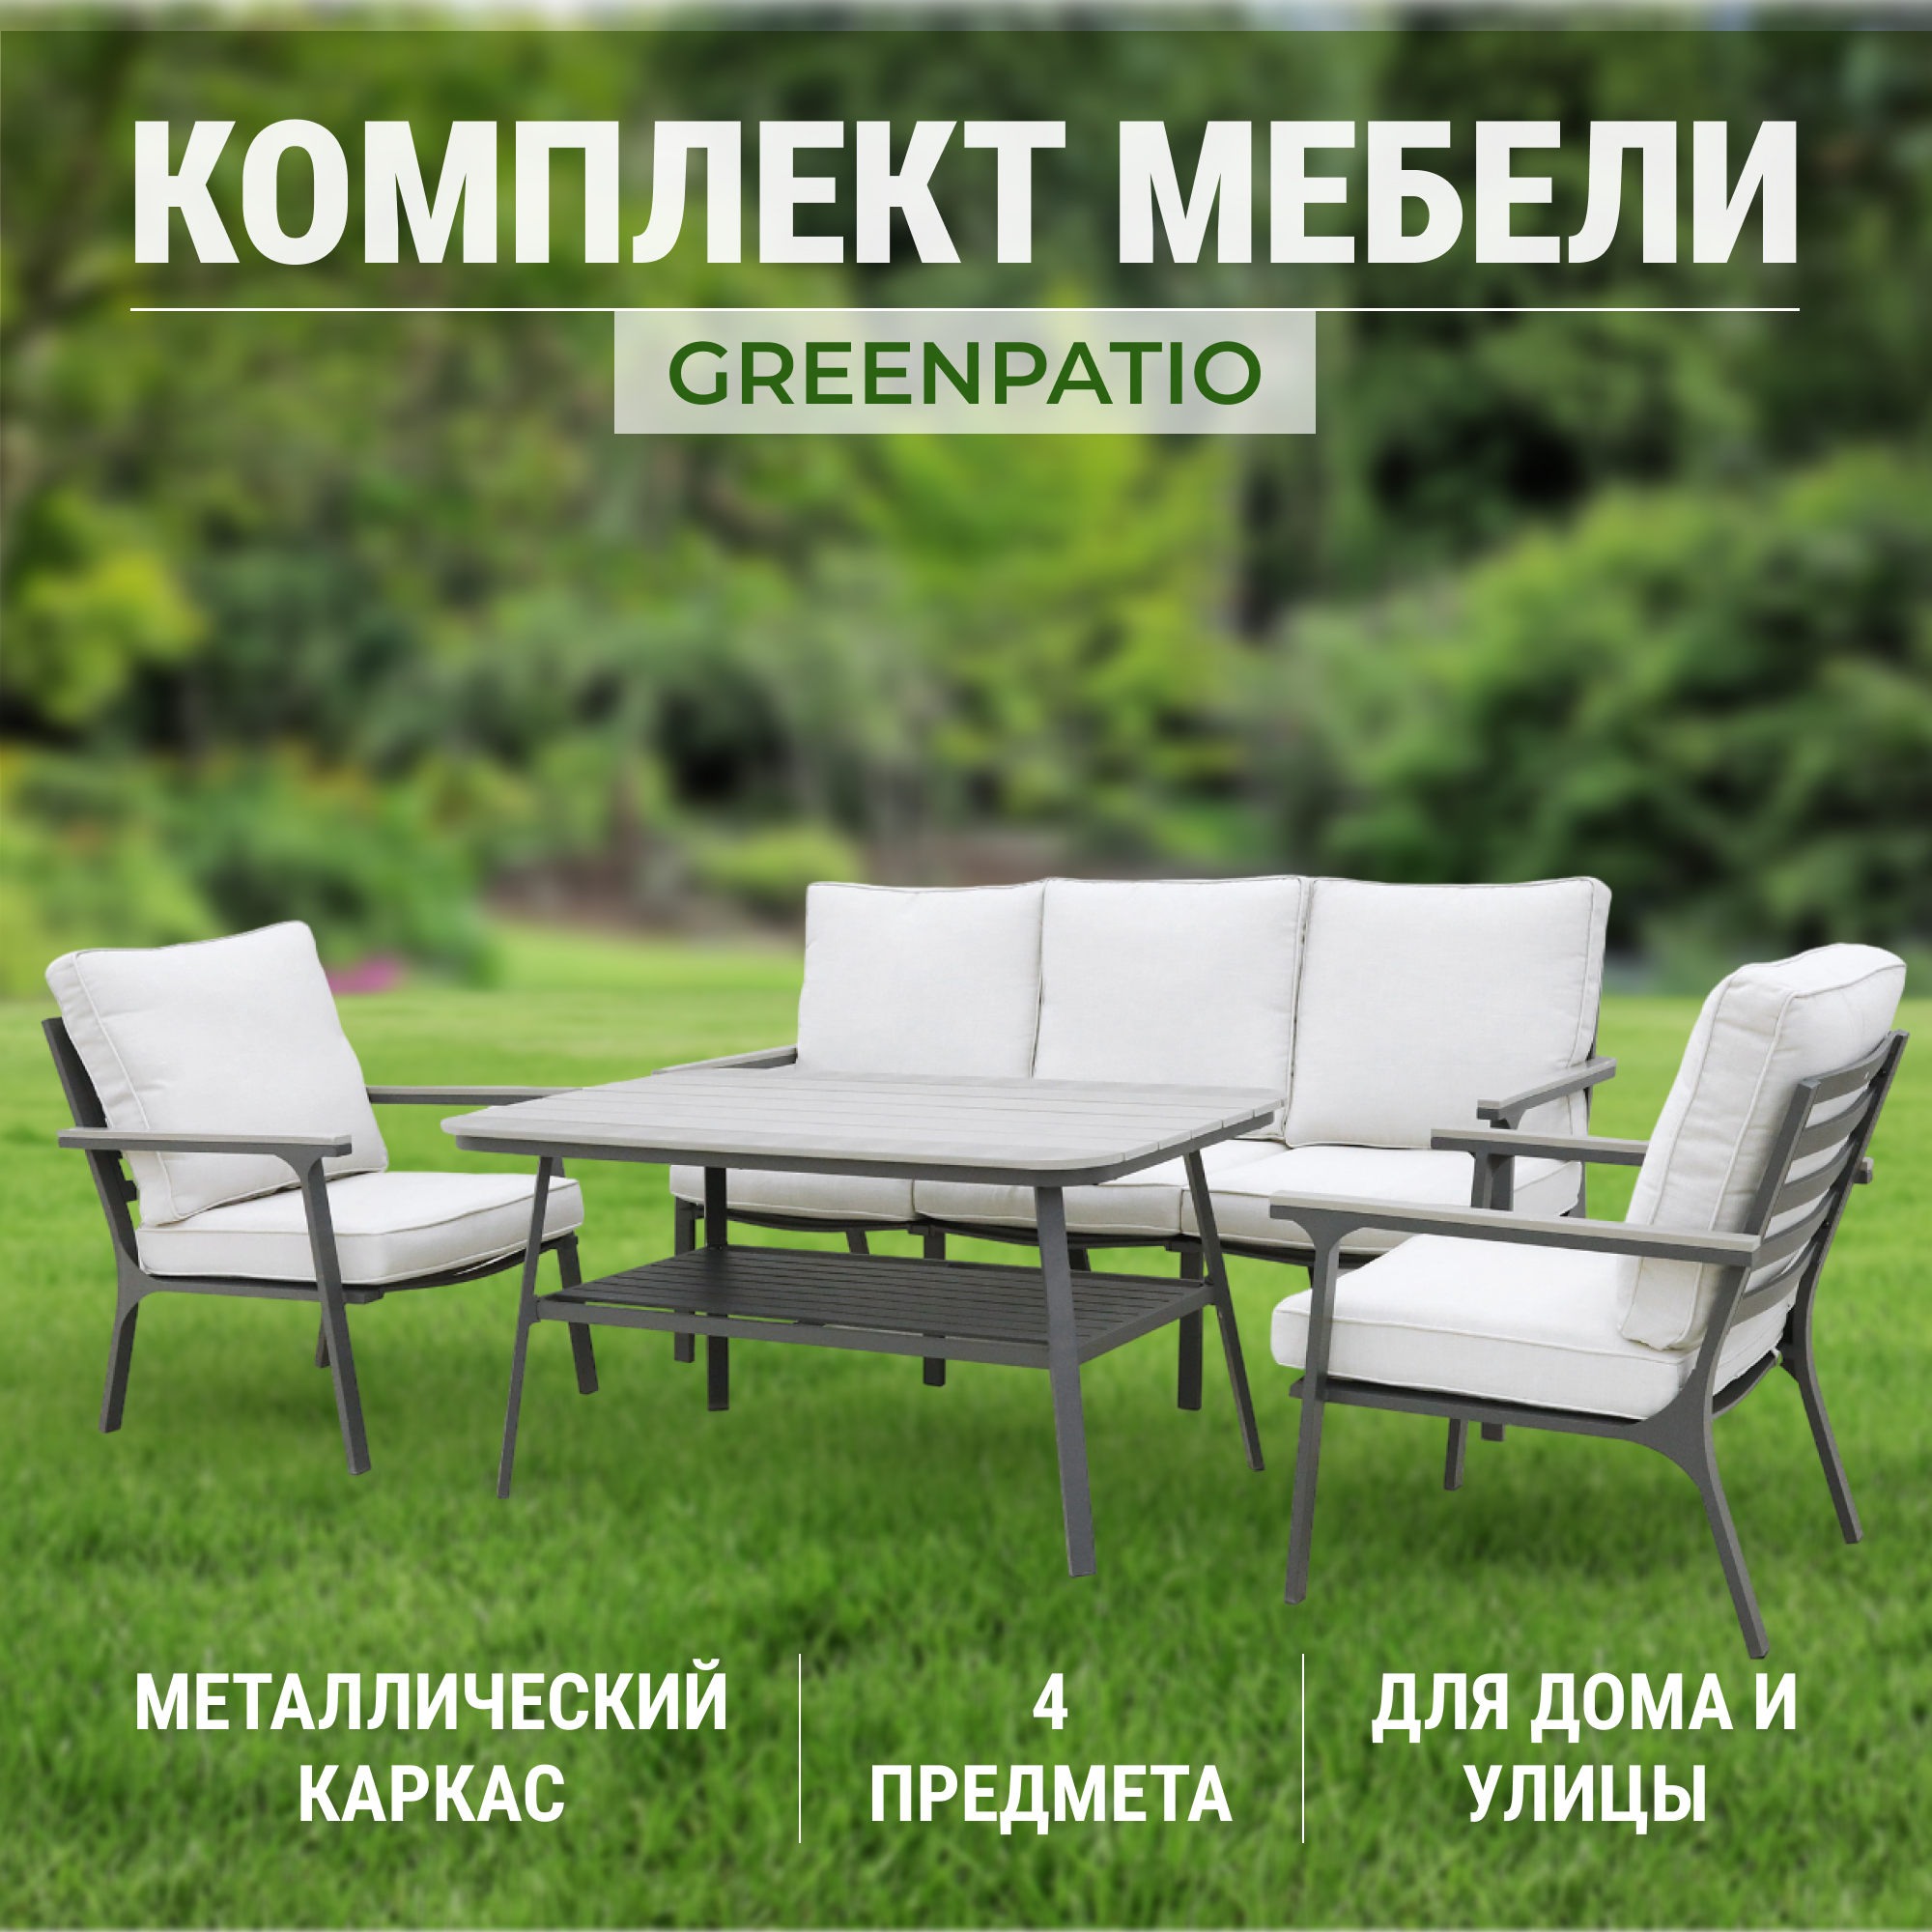 Комплект мебели Greenpatio серый с белым 4 предмета, цвет белый, размер 180х79х80 - фото 2